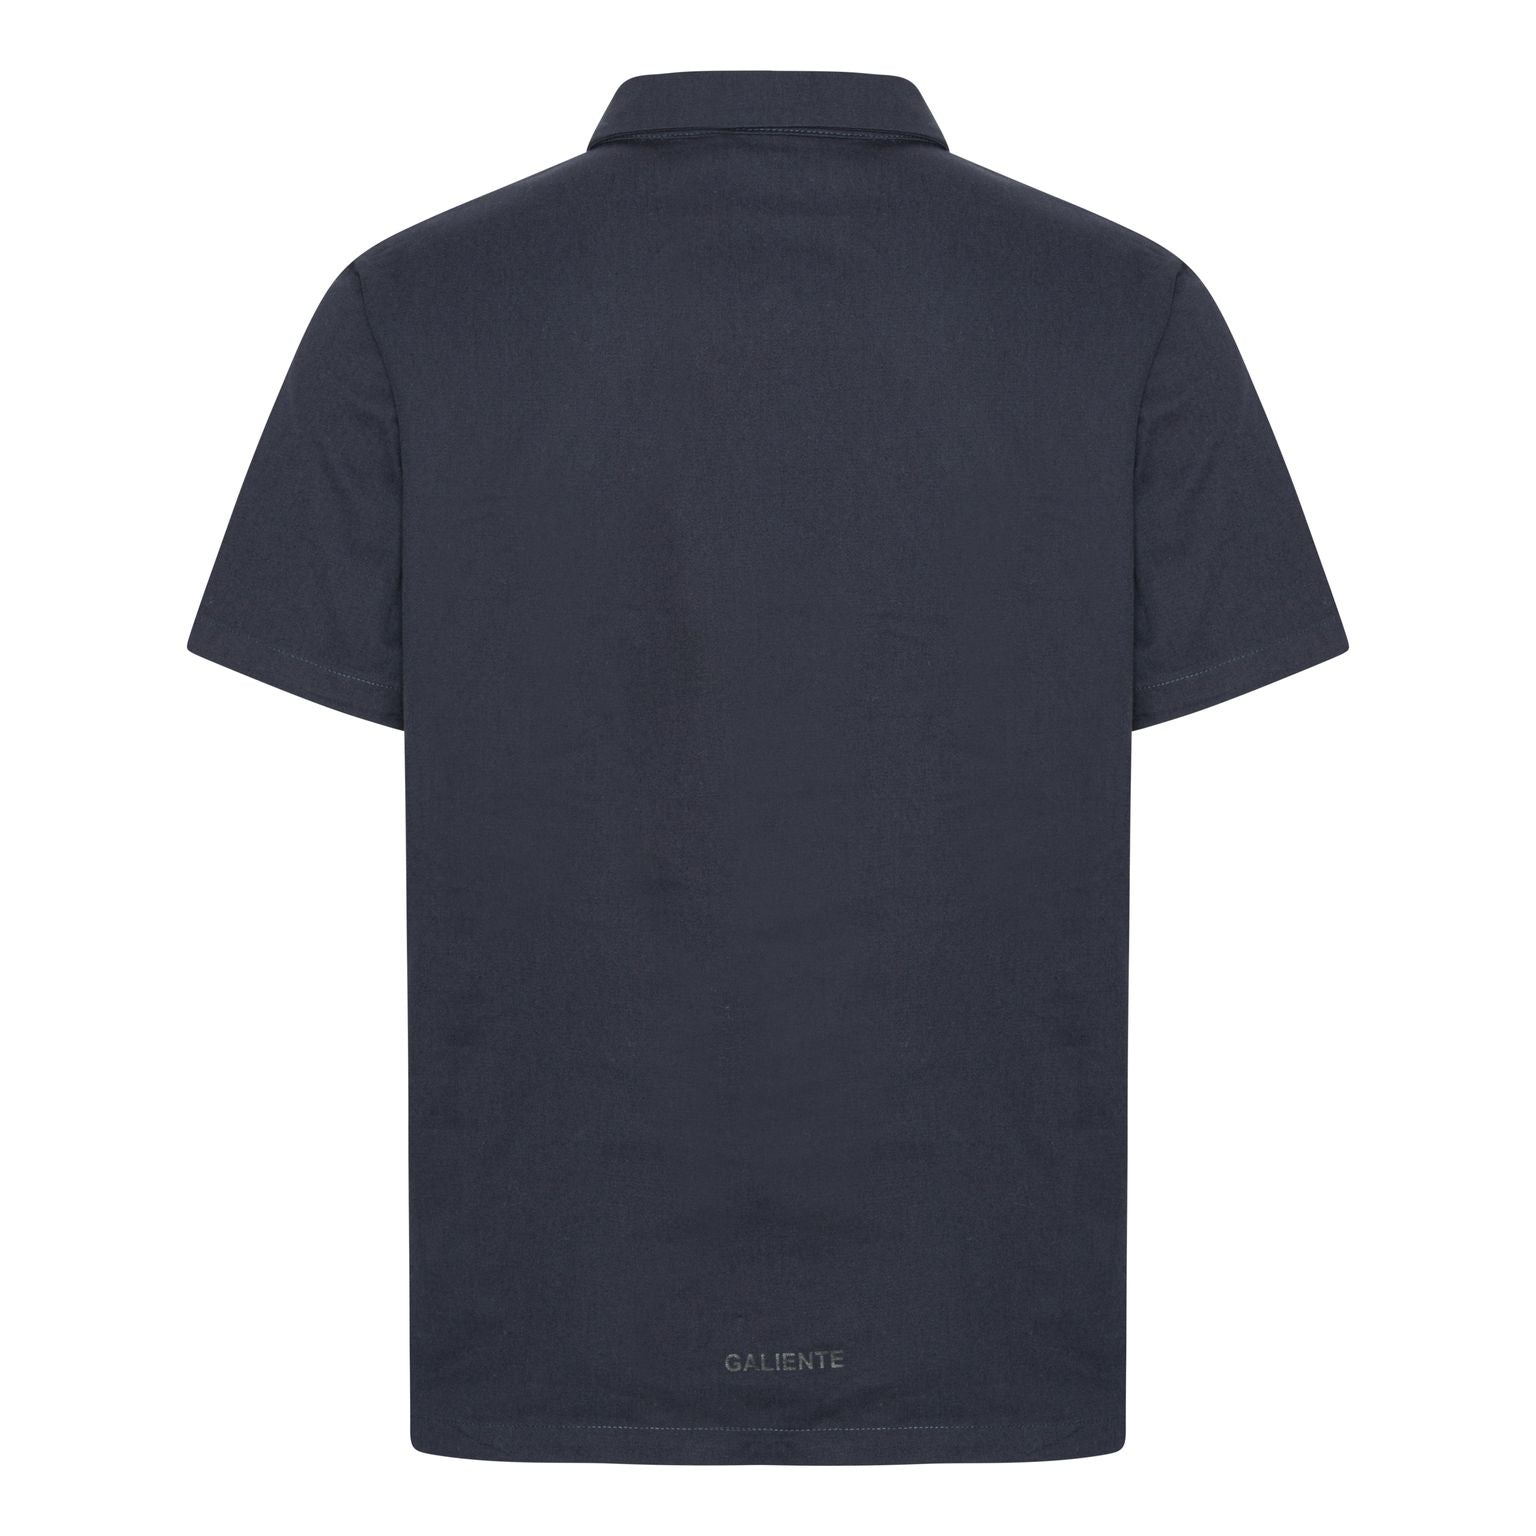 Short sleeve navy blue cargo shirt